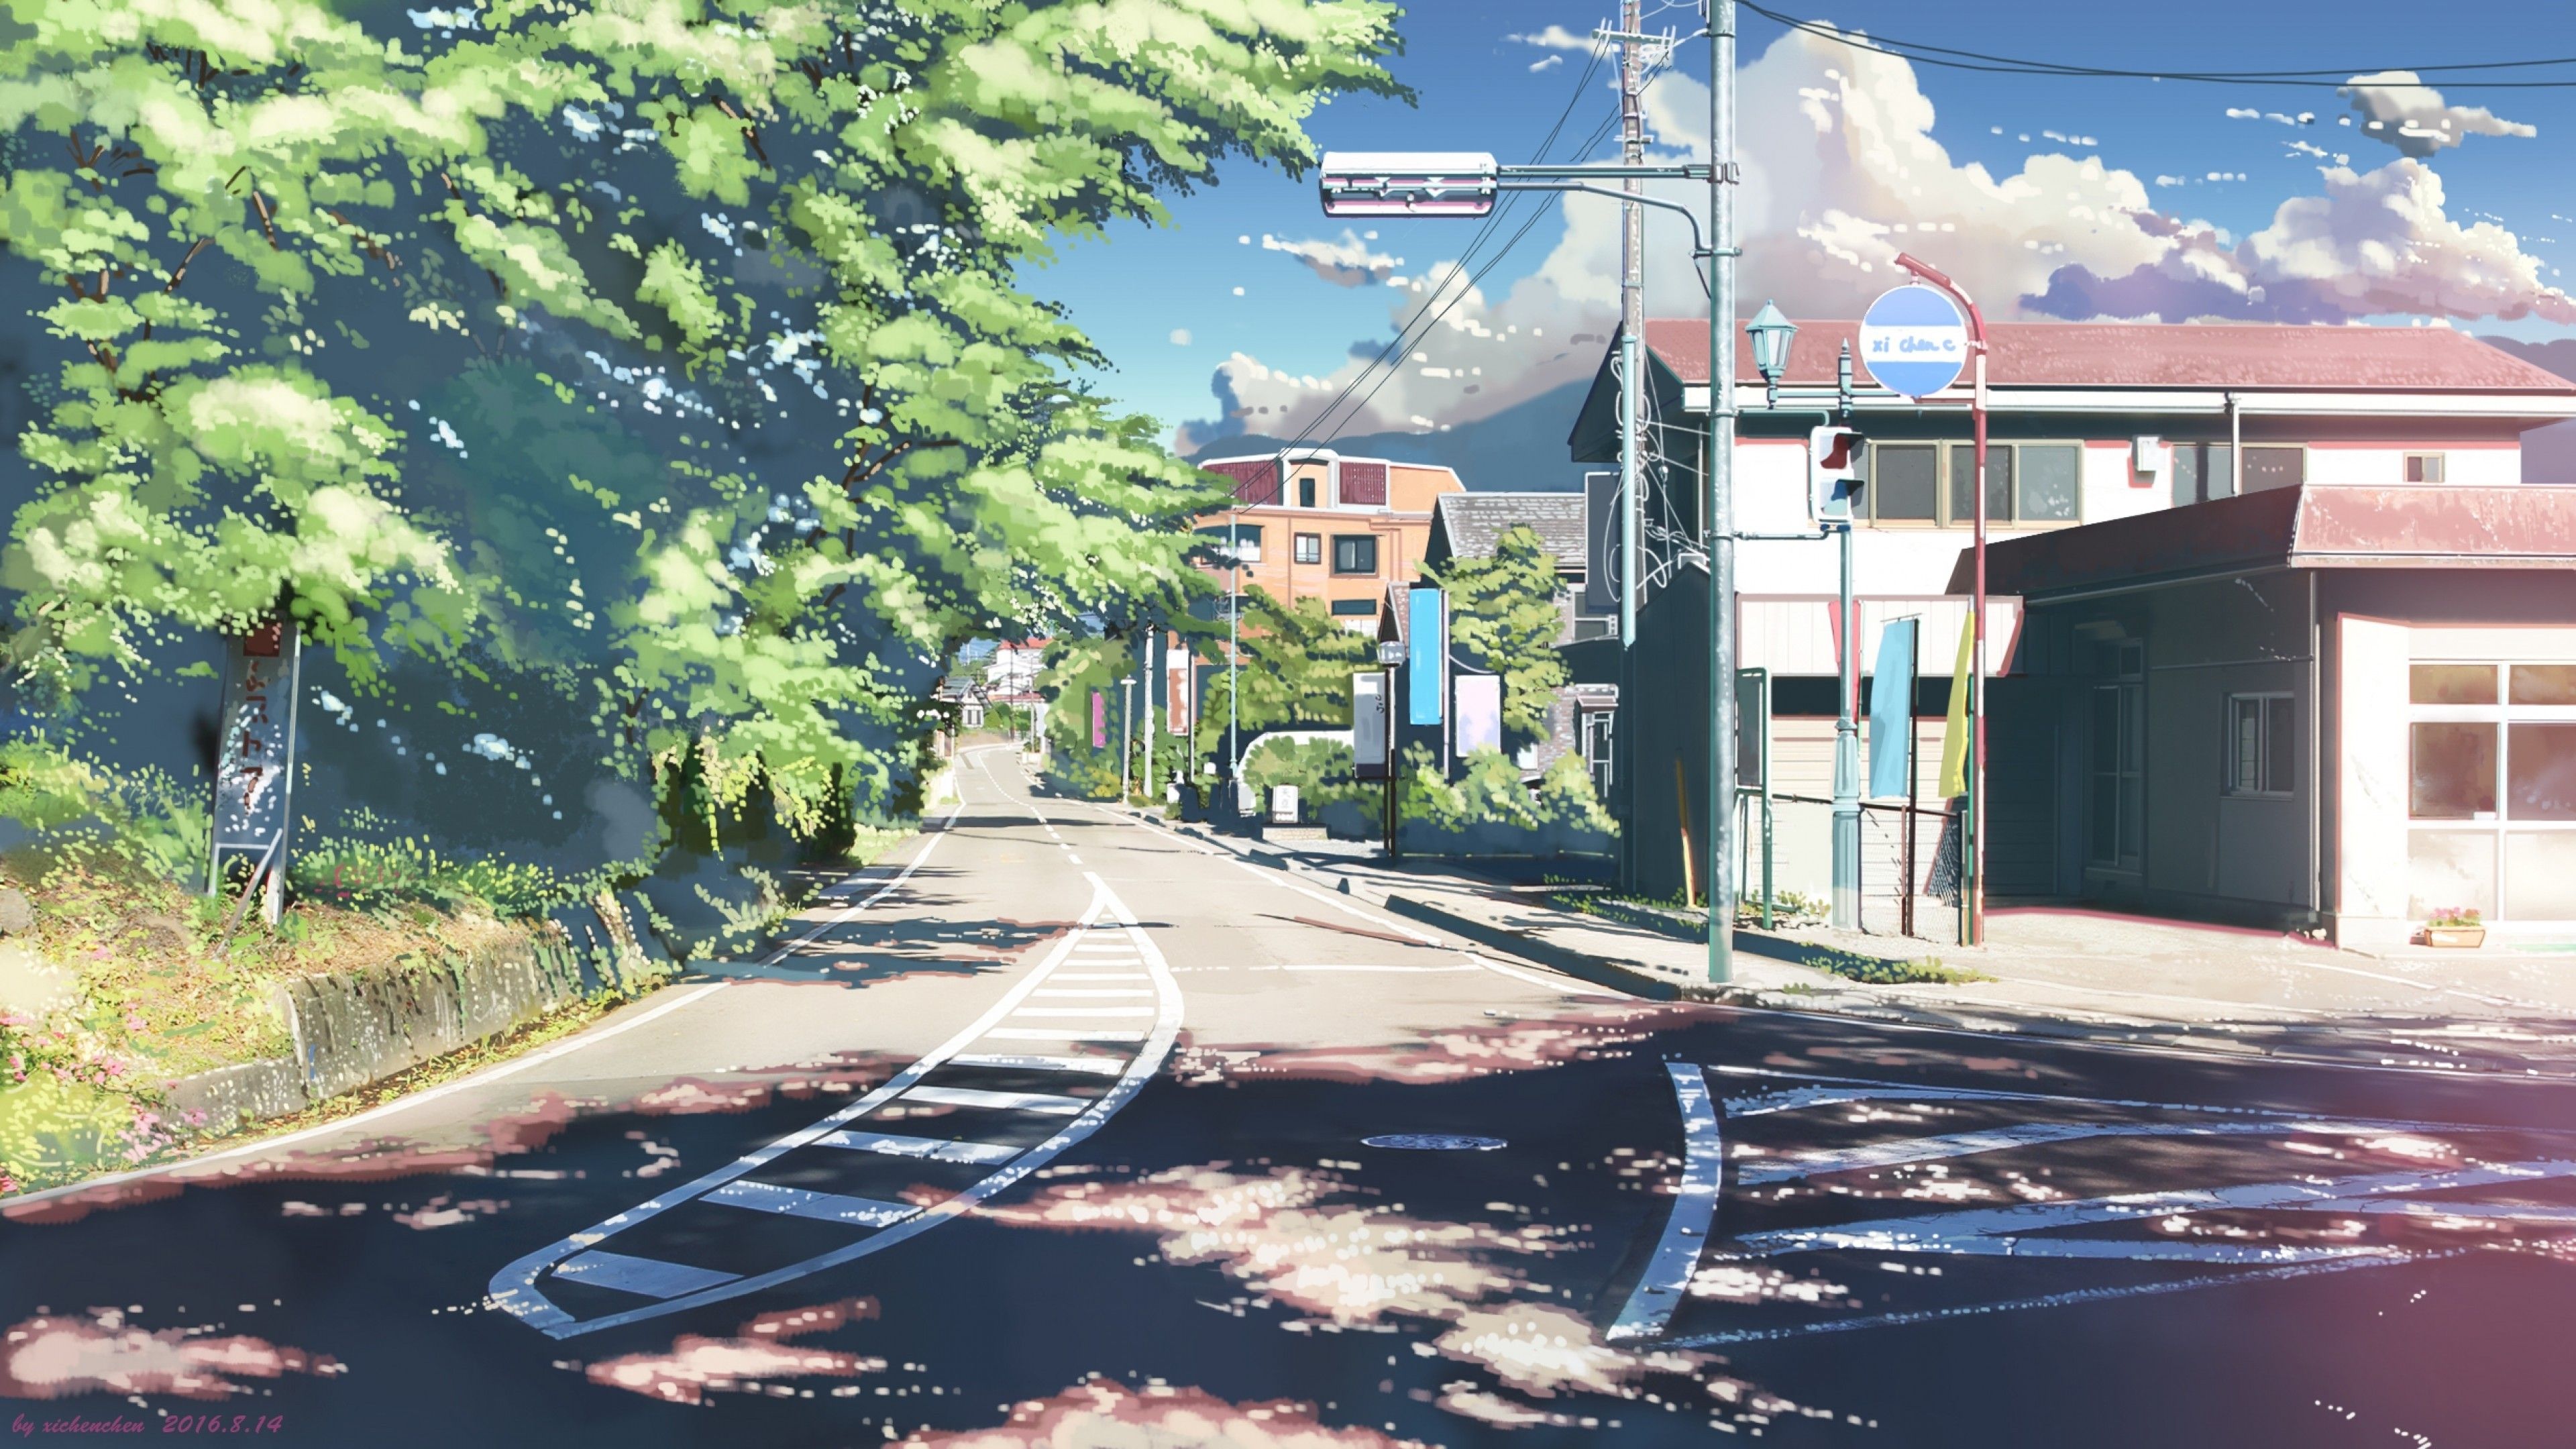 wallpaper for desktop, laptop  bl92-art-anime-japan-street-cute